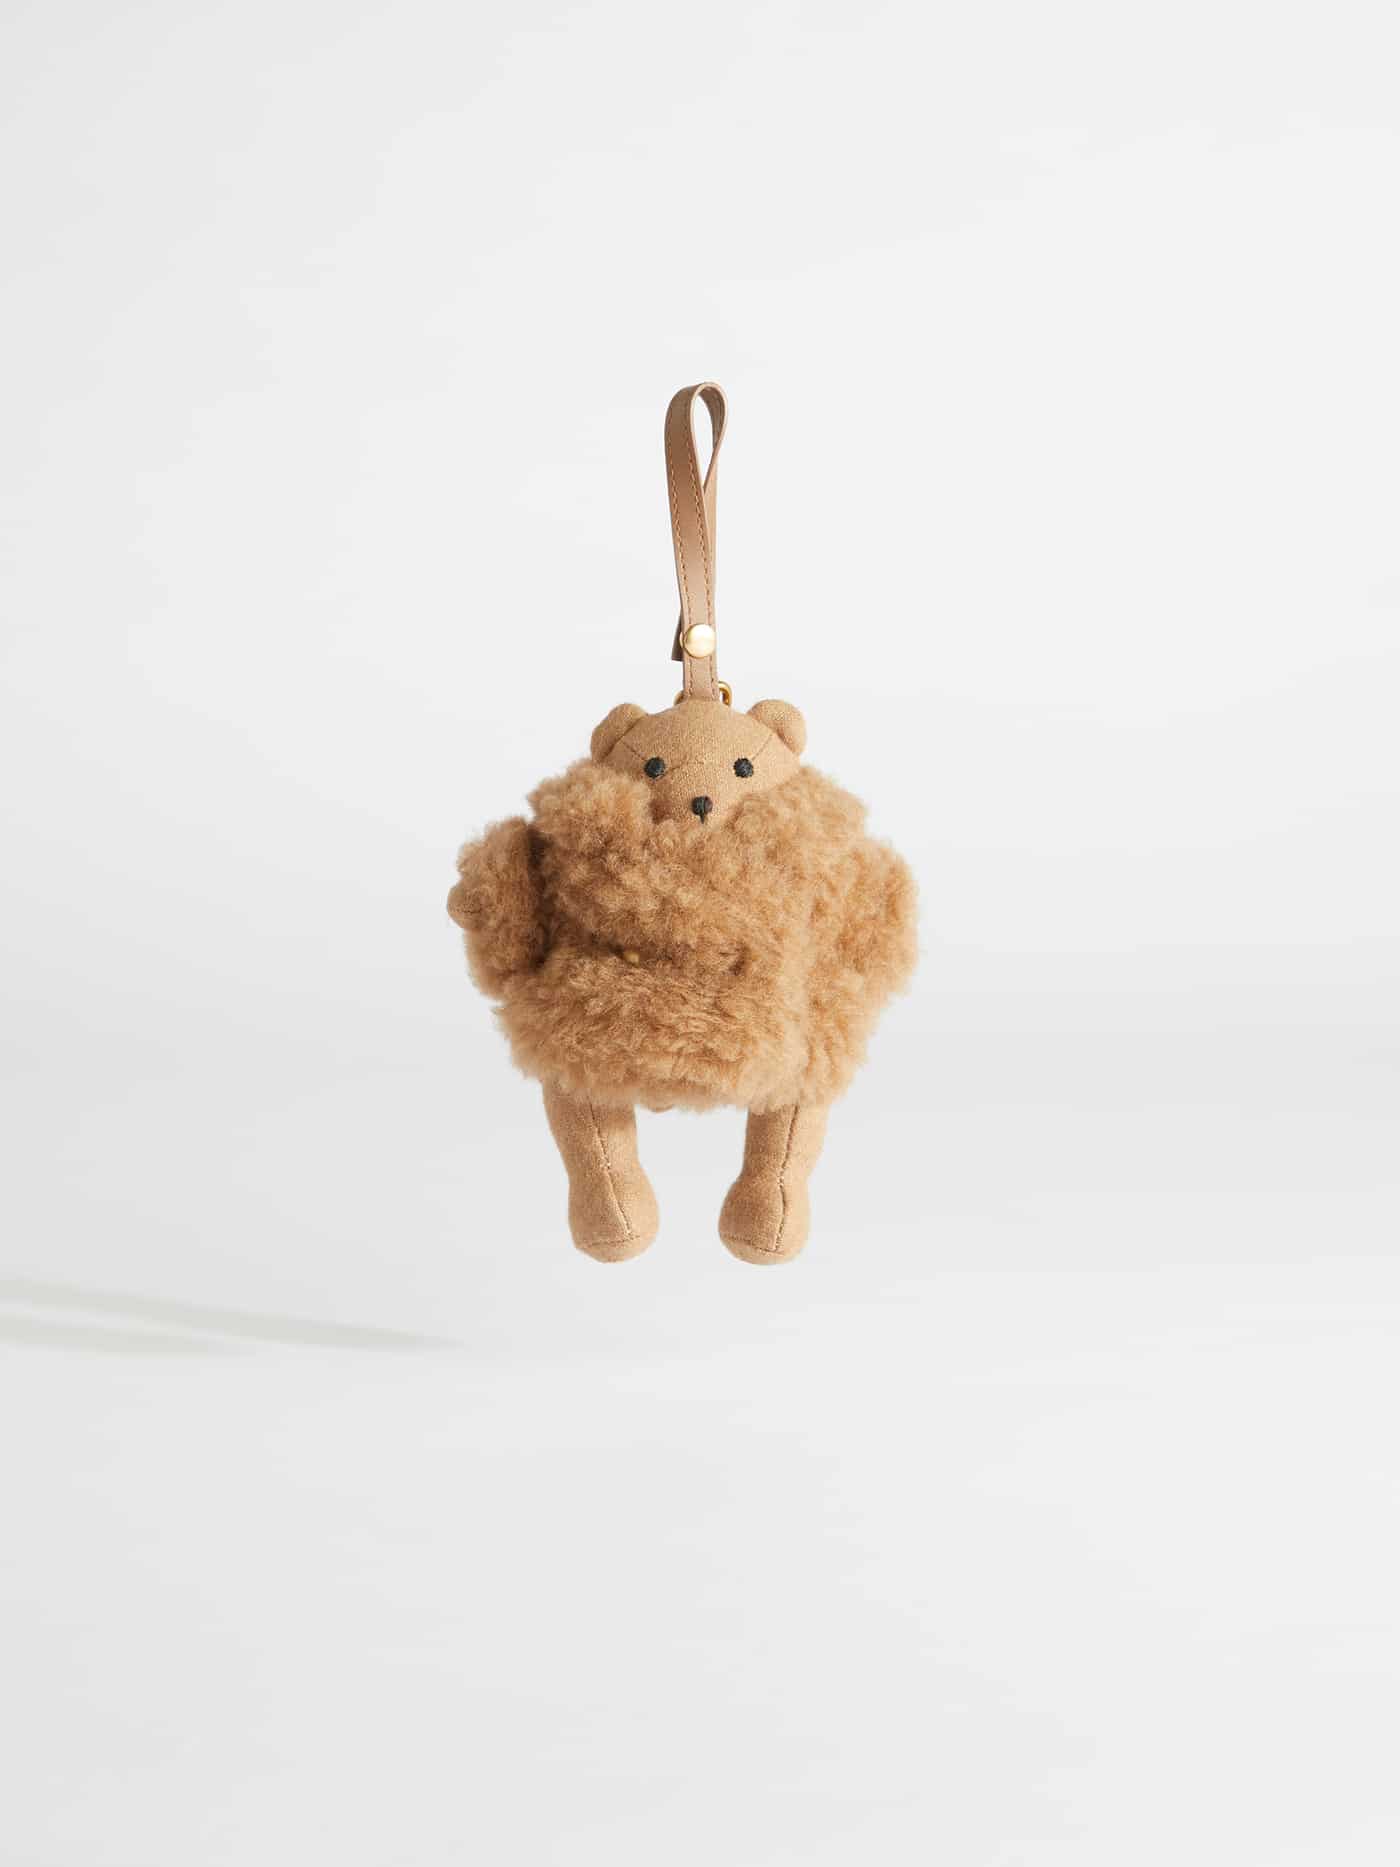 Max Mara's Teddy Bear Gift Collection Is So Cute! — Teddy Bear Gifts